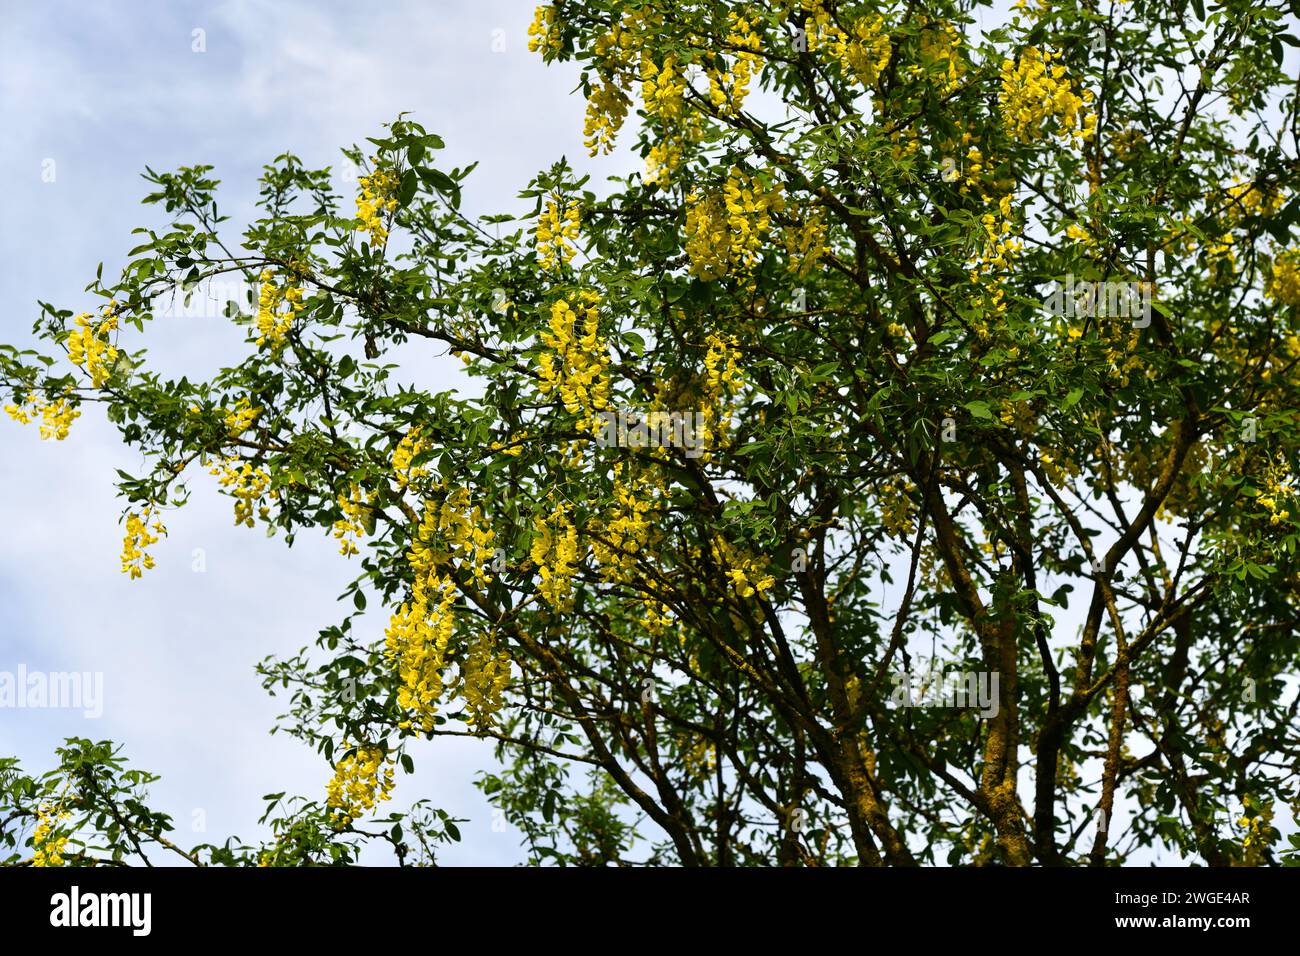 Common laburnum with yellow flowers Stock Photo